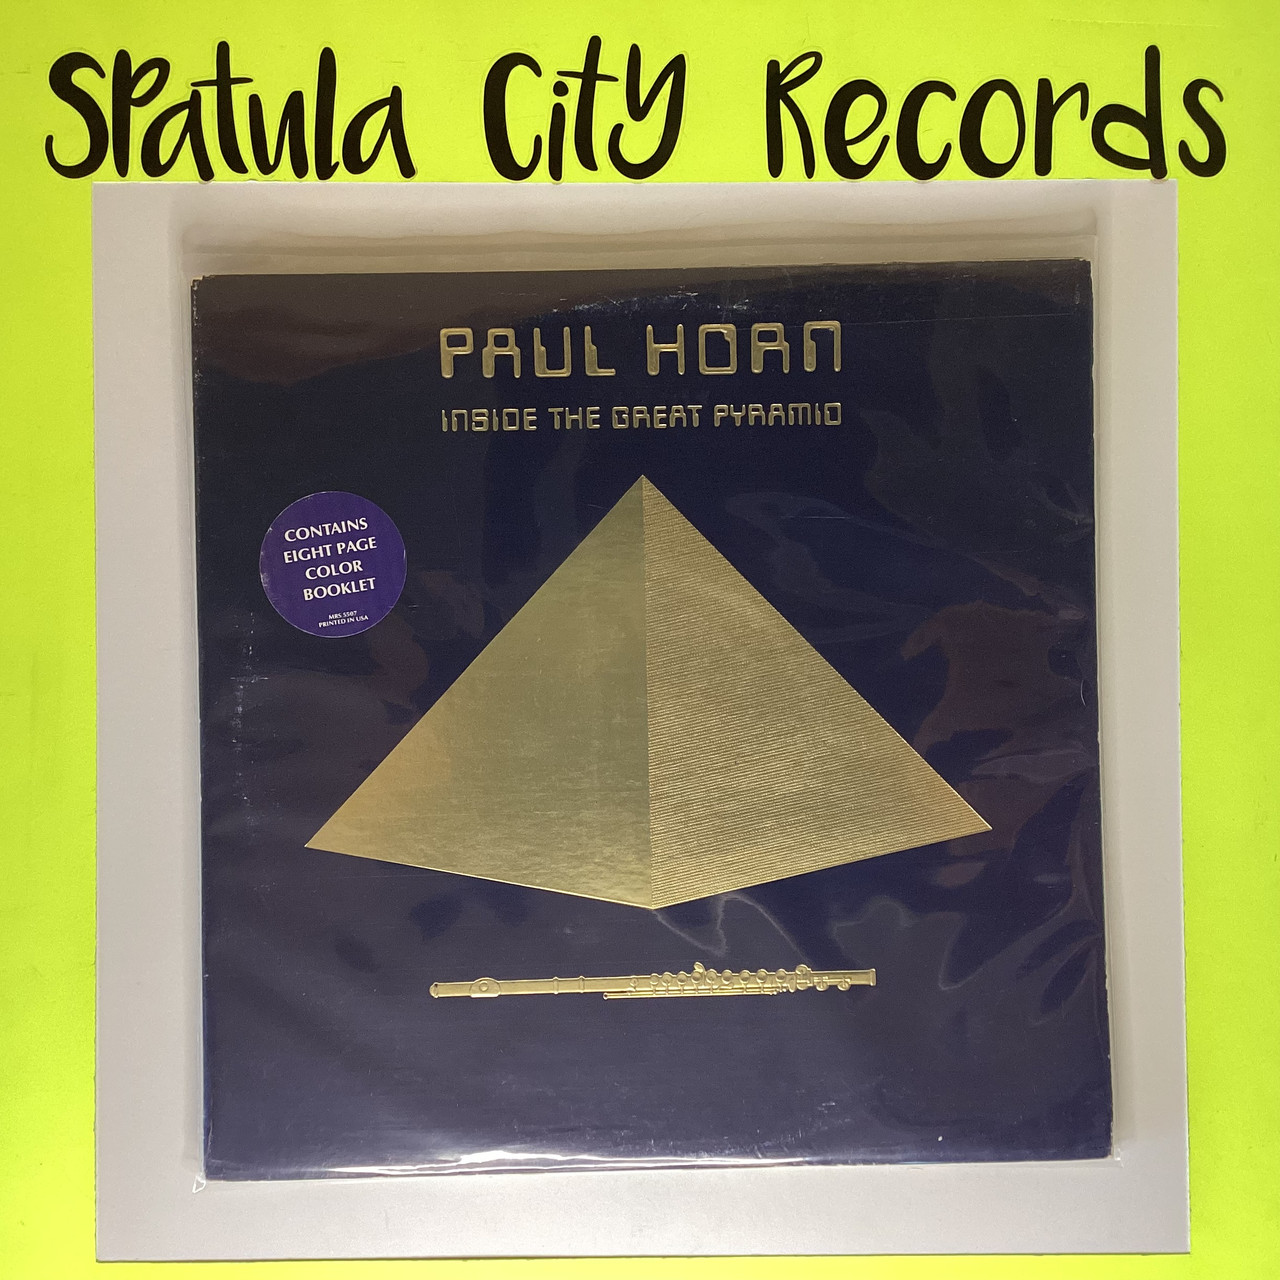 Paul Horn - Inside The Great Pyramid - double vinyl record album LP